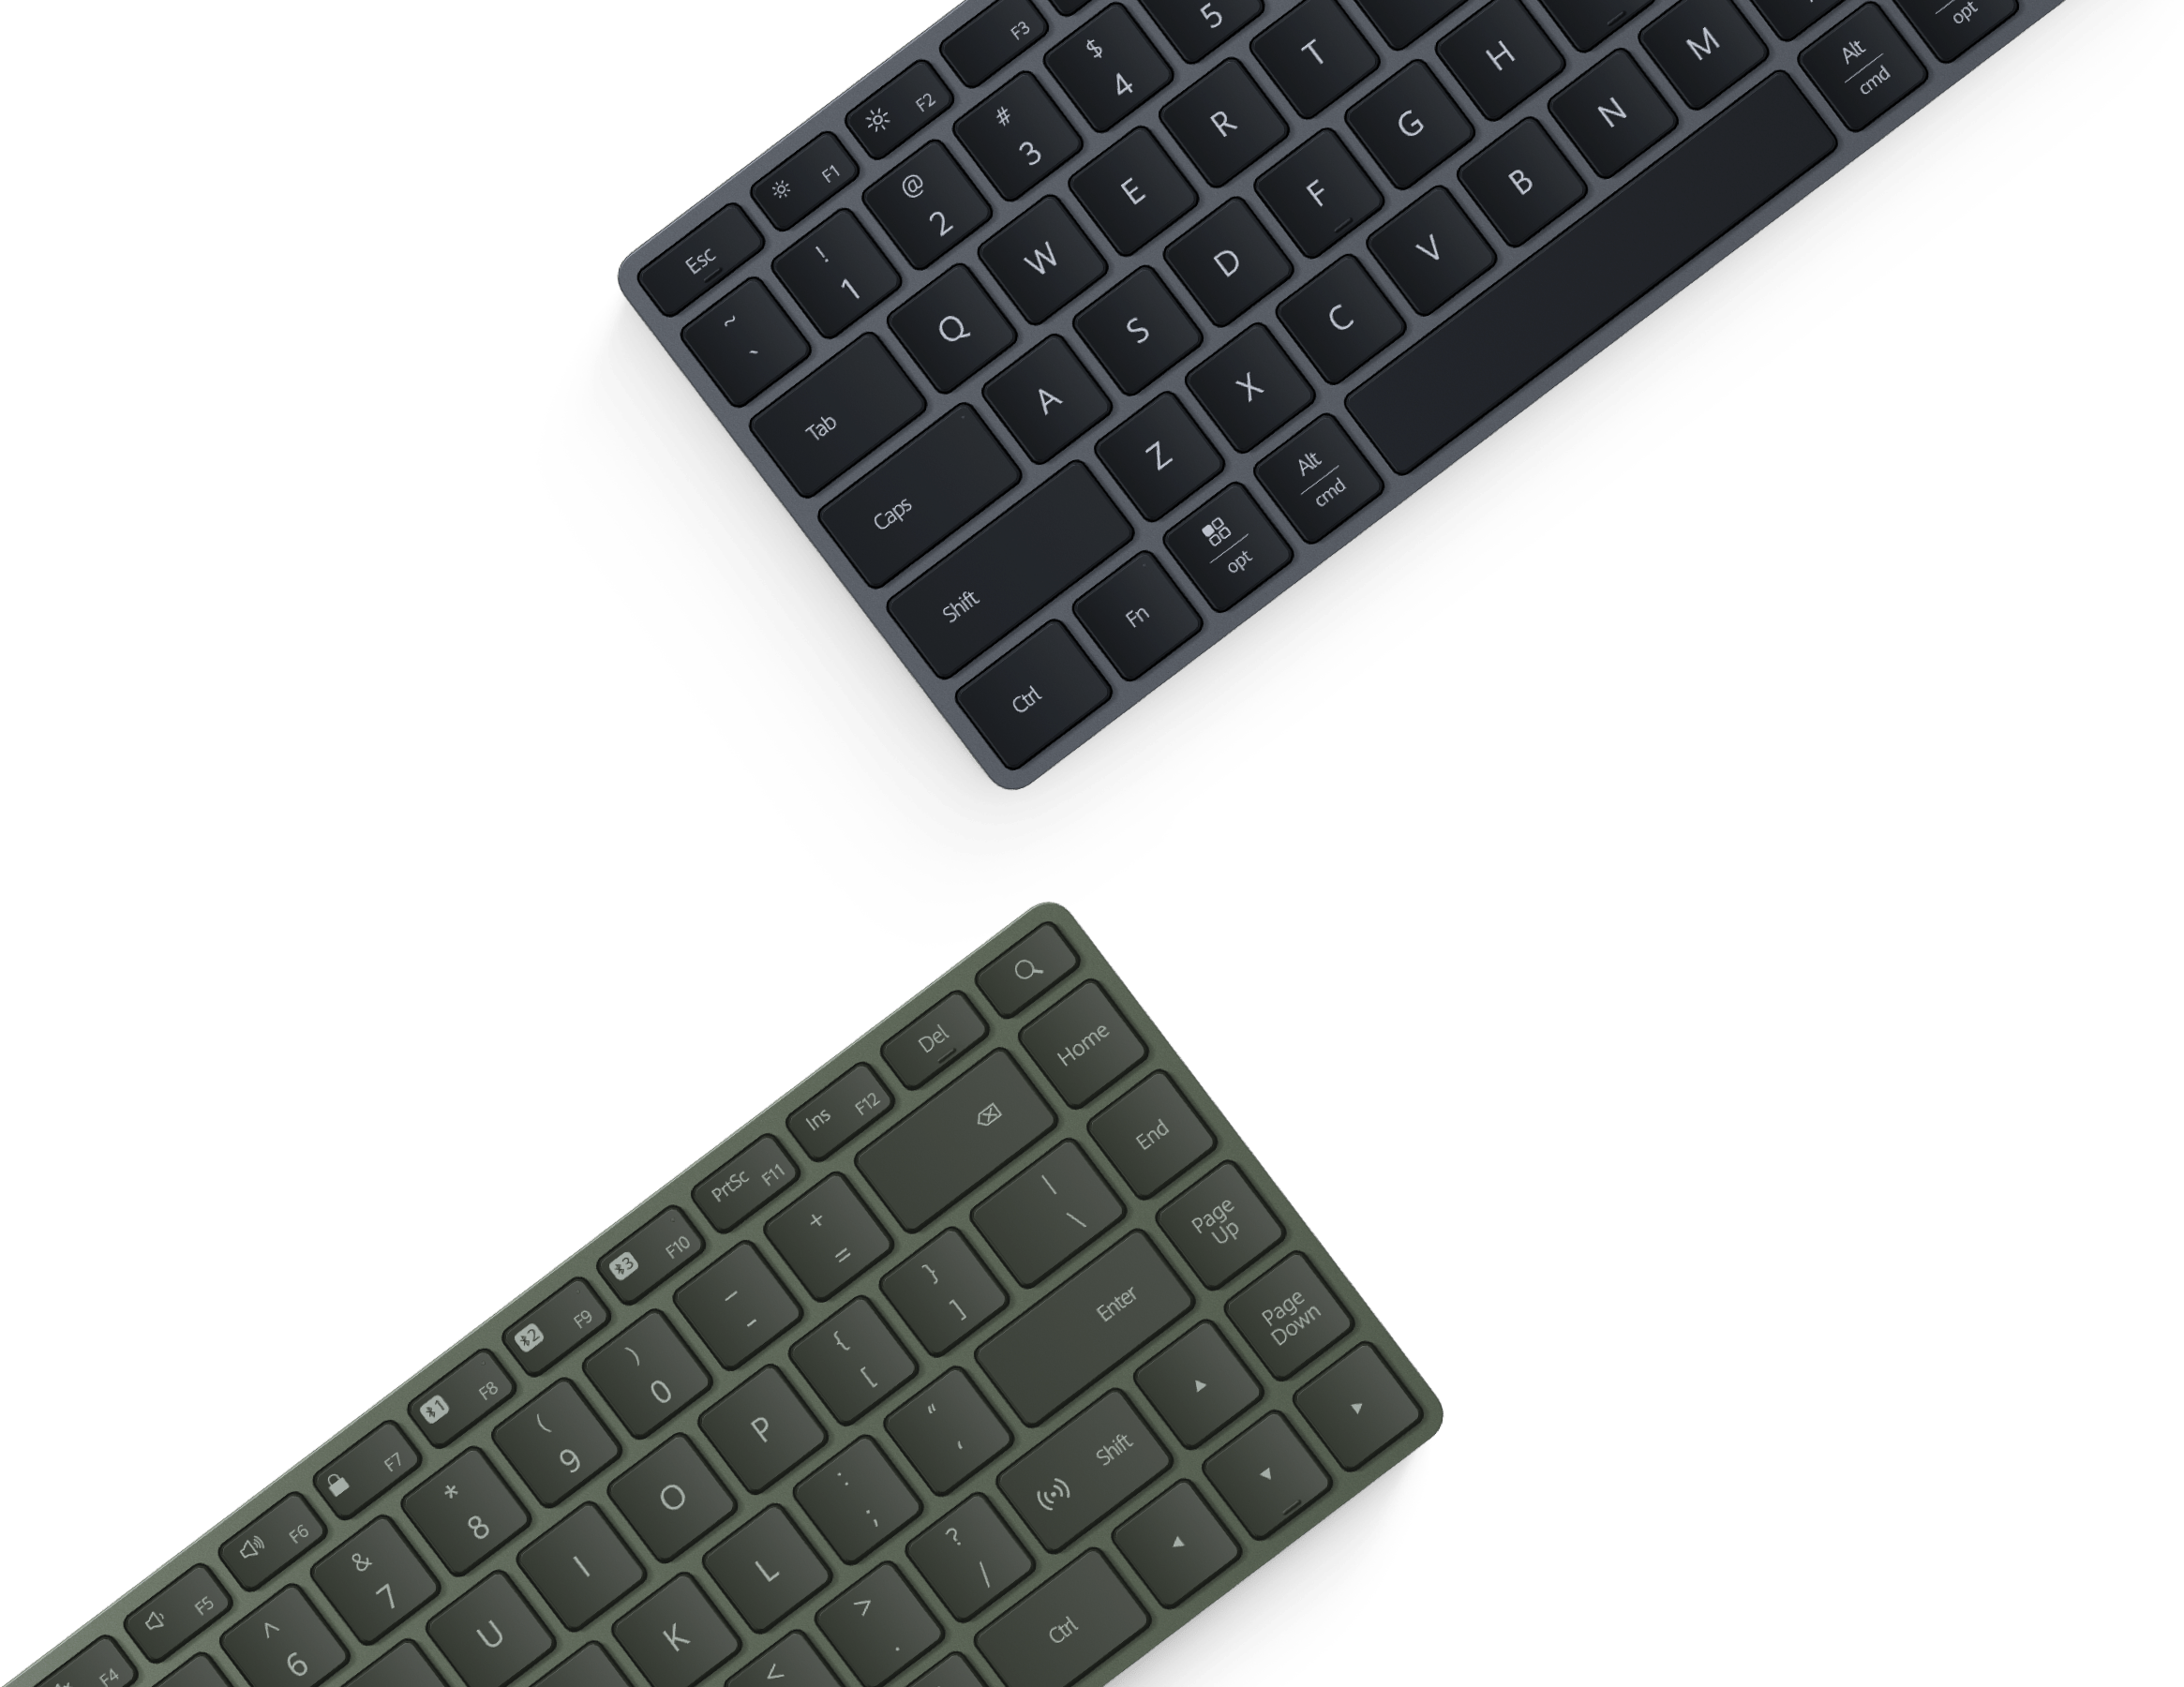 HUAWEI Ultrathin Keyboard Key Vision
                    